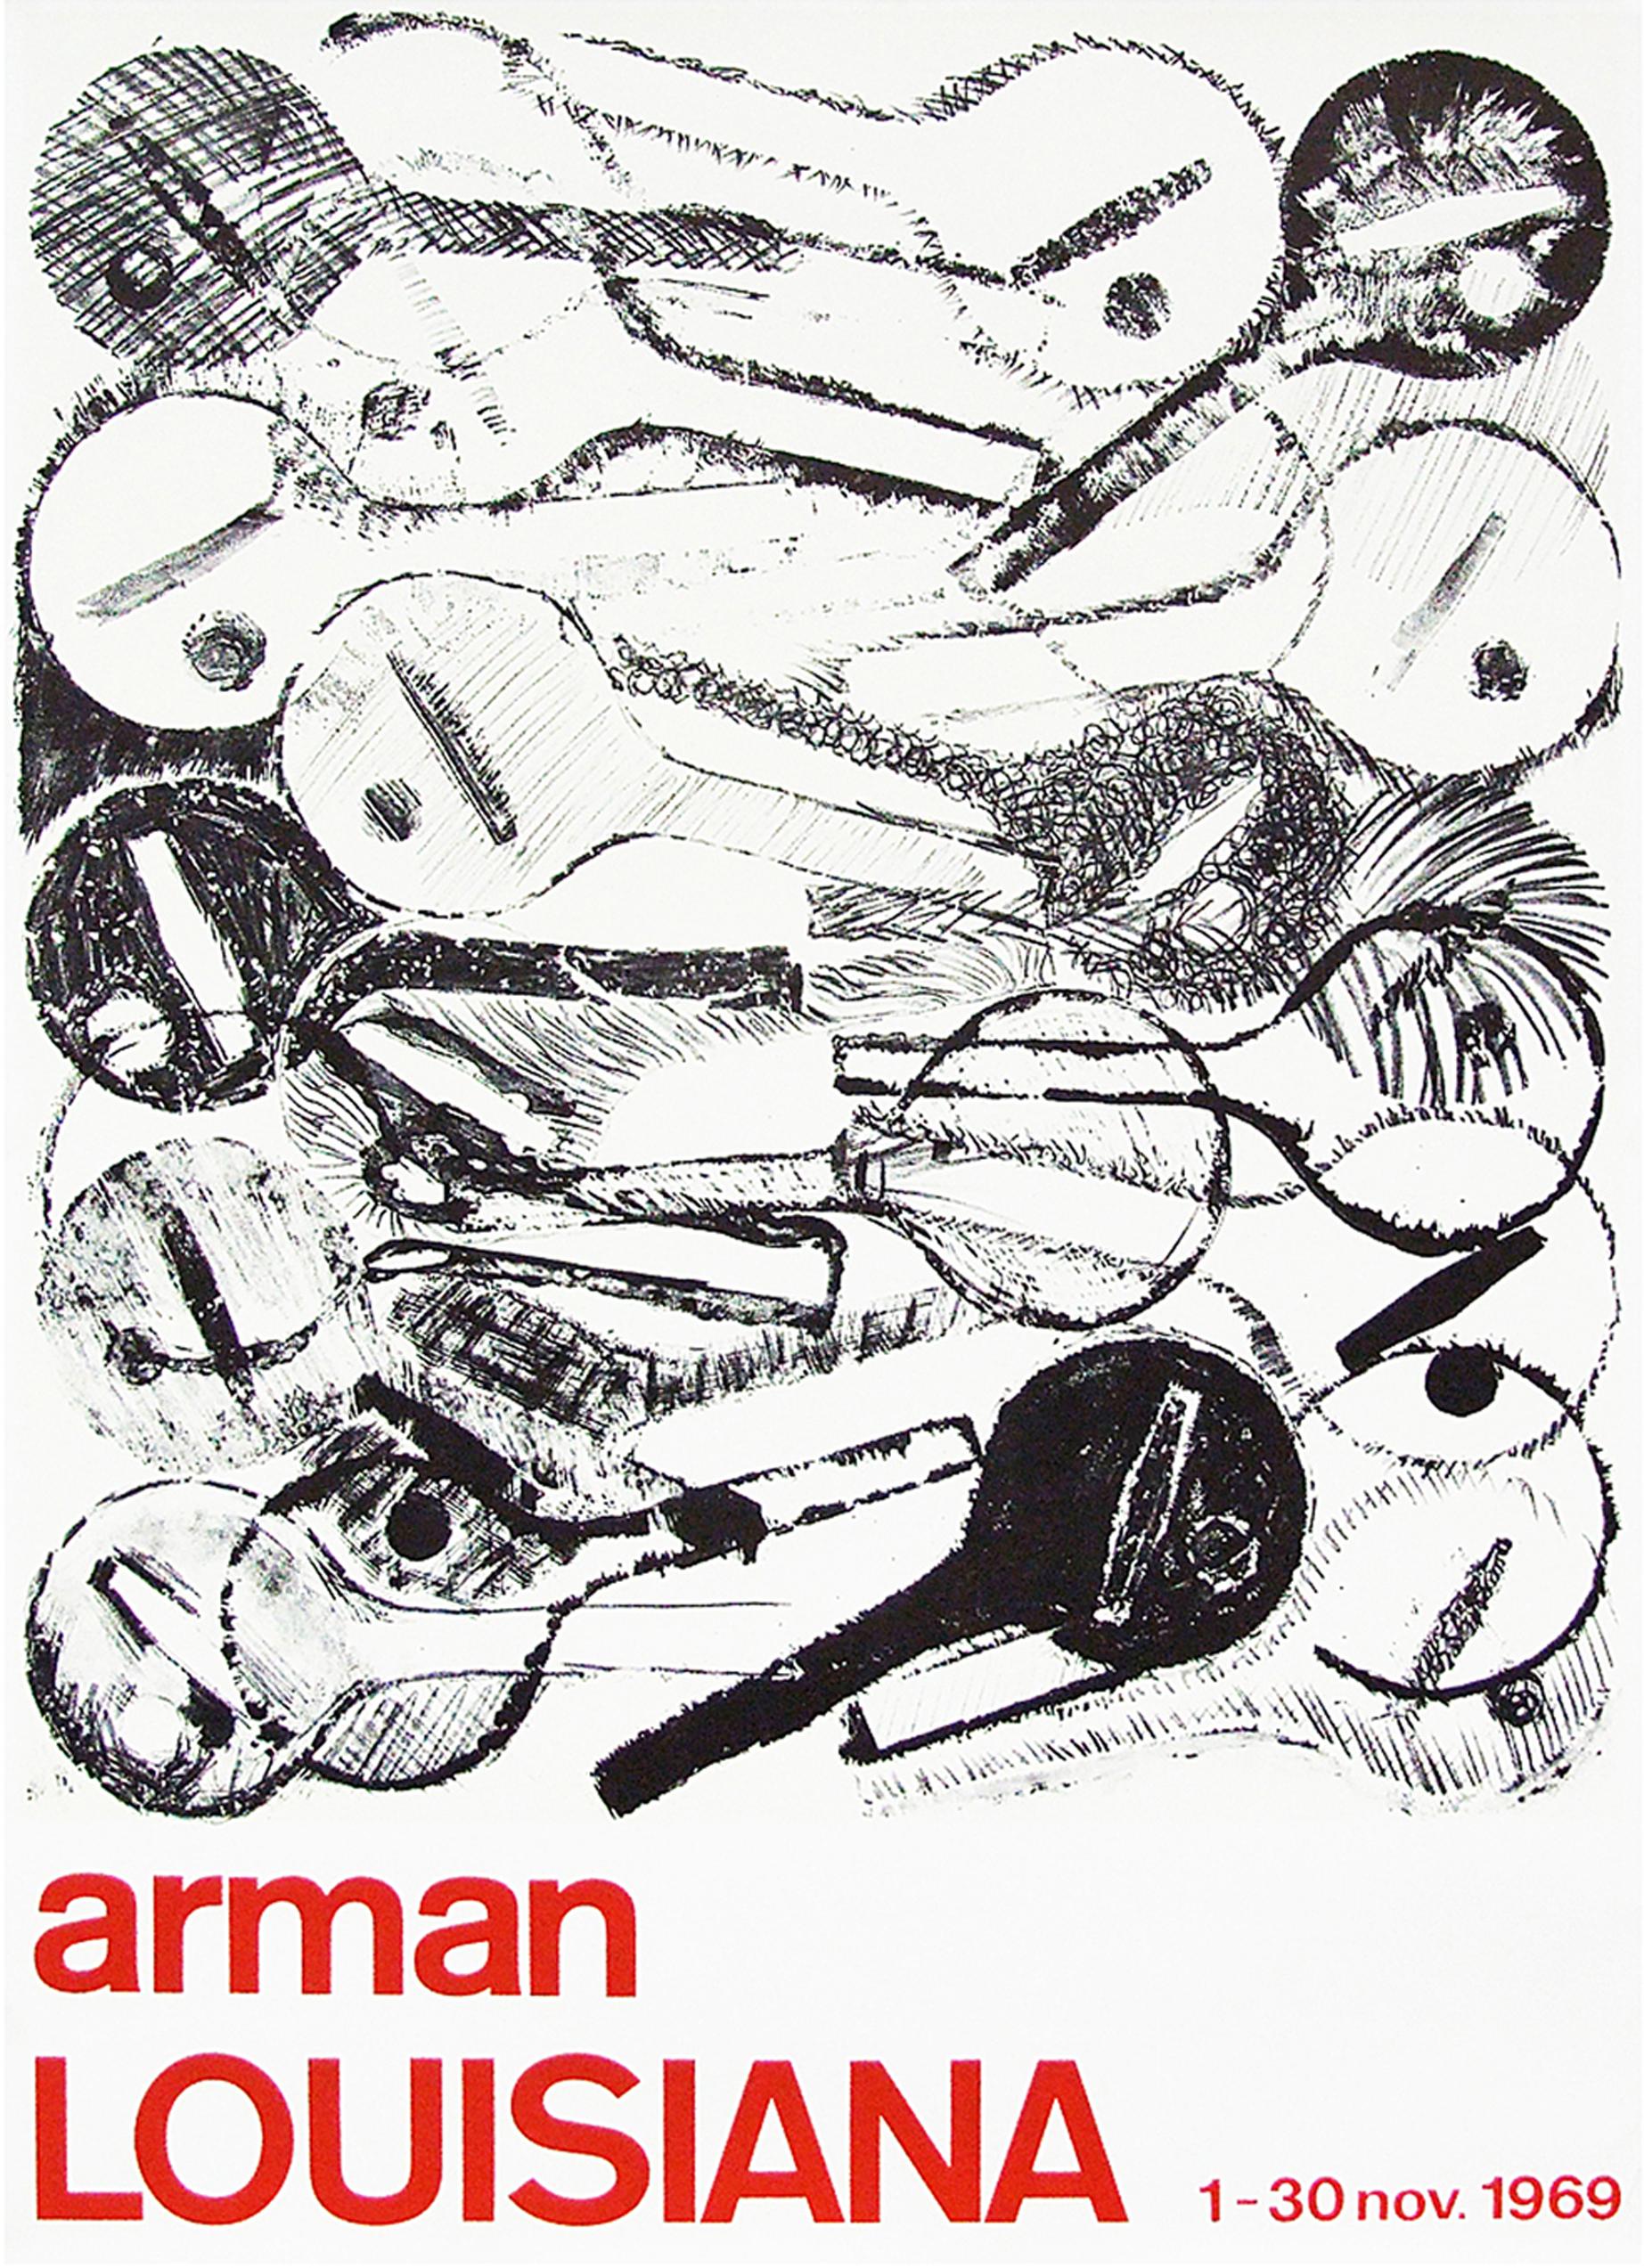 1960s Arman Art Exhibition Poster Design Pop Art Guitar In Good Condition For Sale In Nottingham, Nottinghamshire